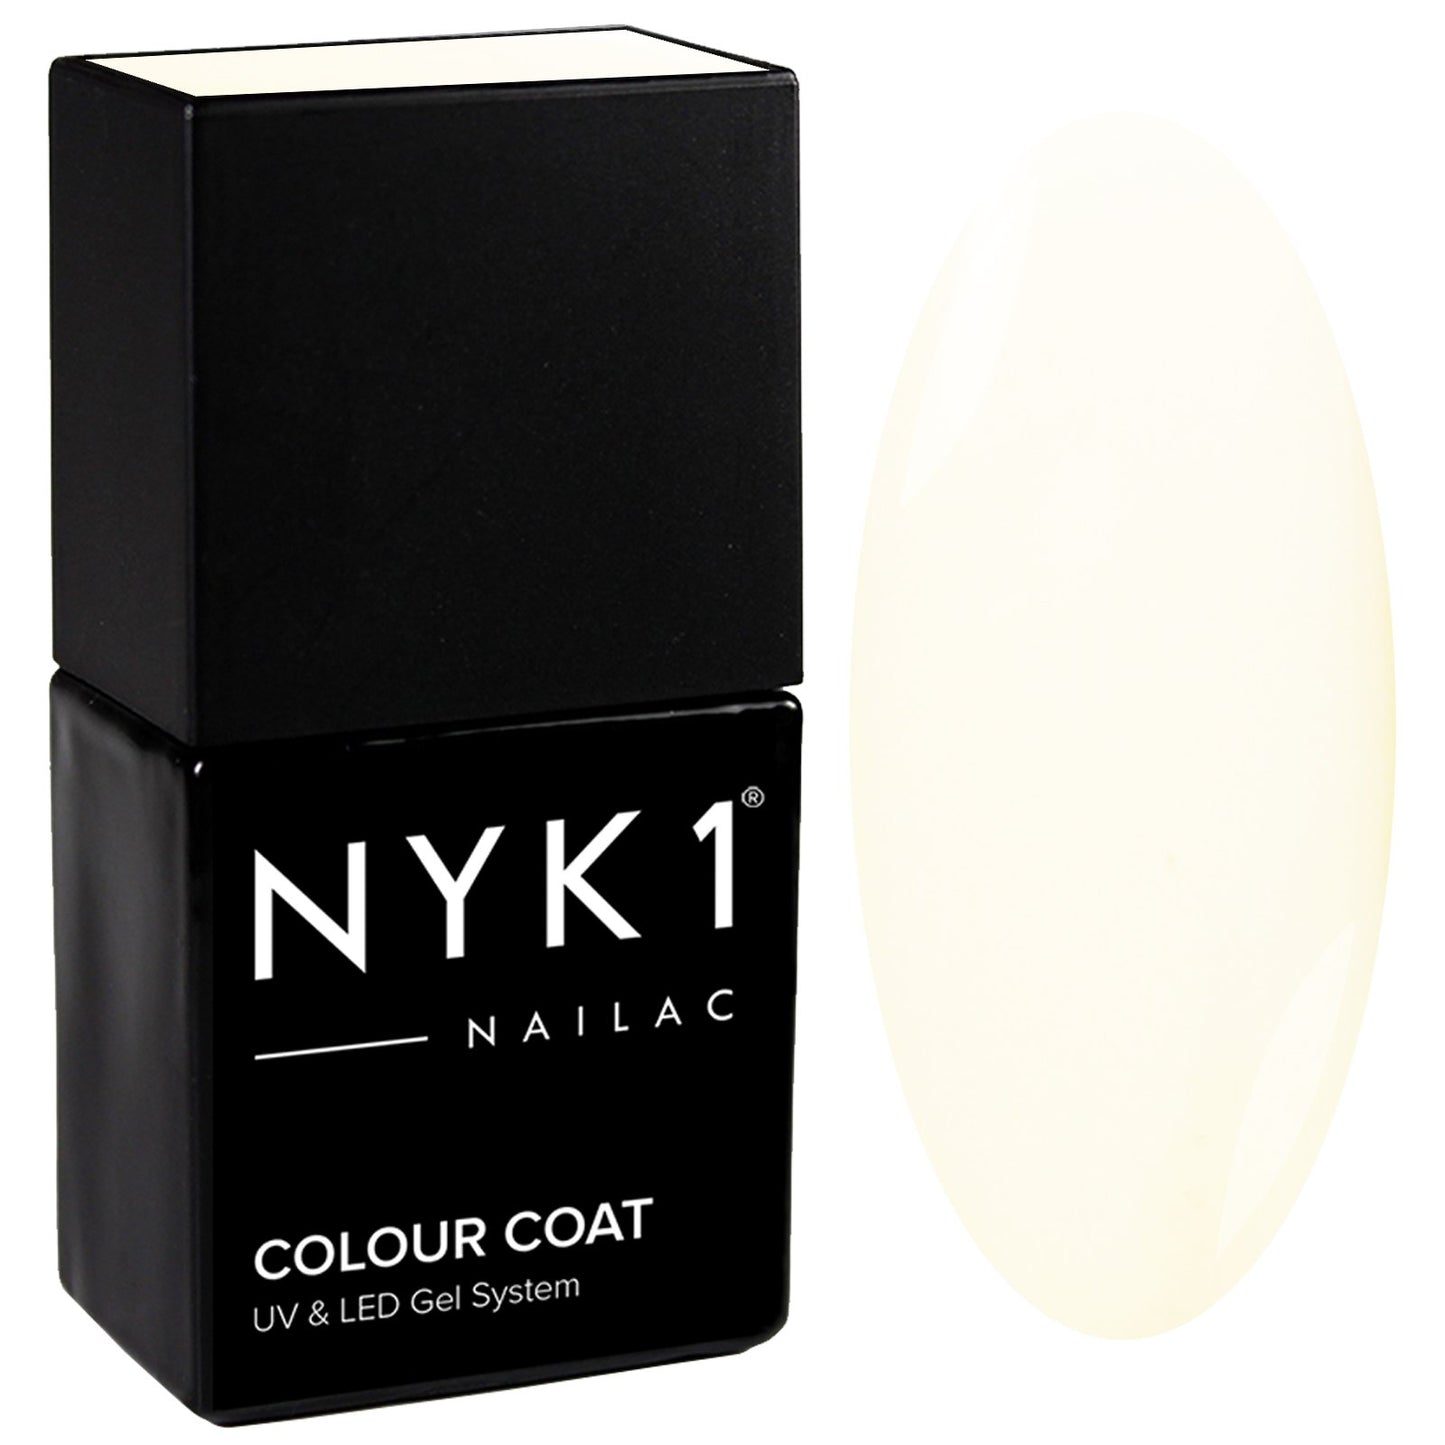 NYK1 Soft White Studio White Gel Nail Polish